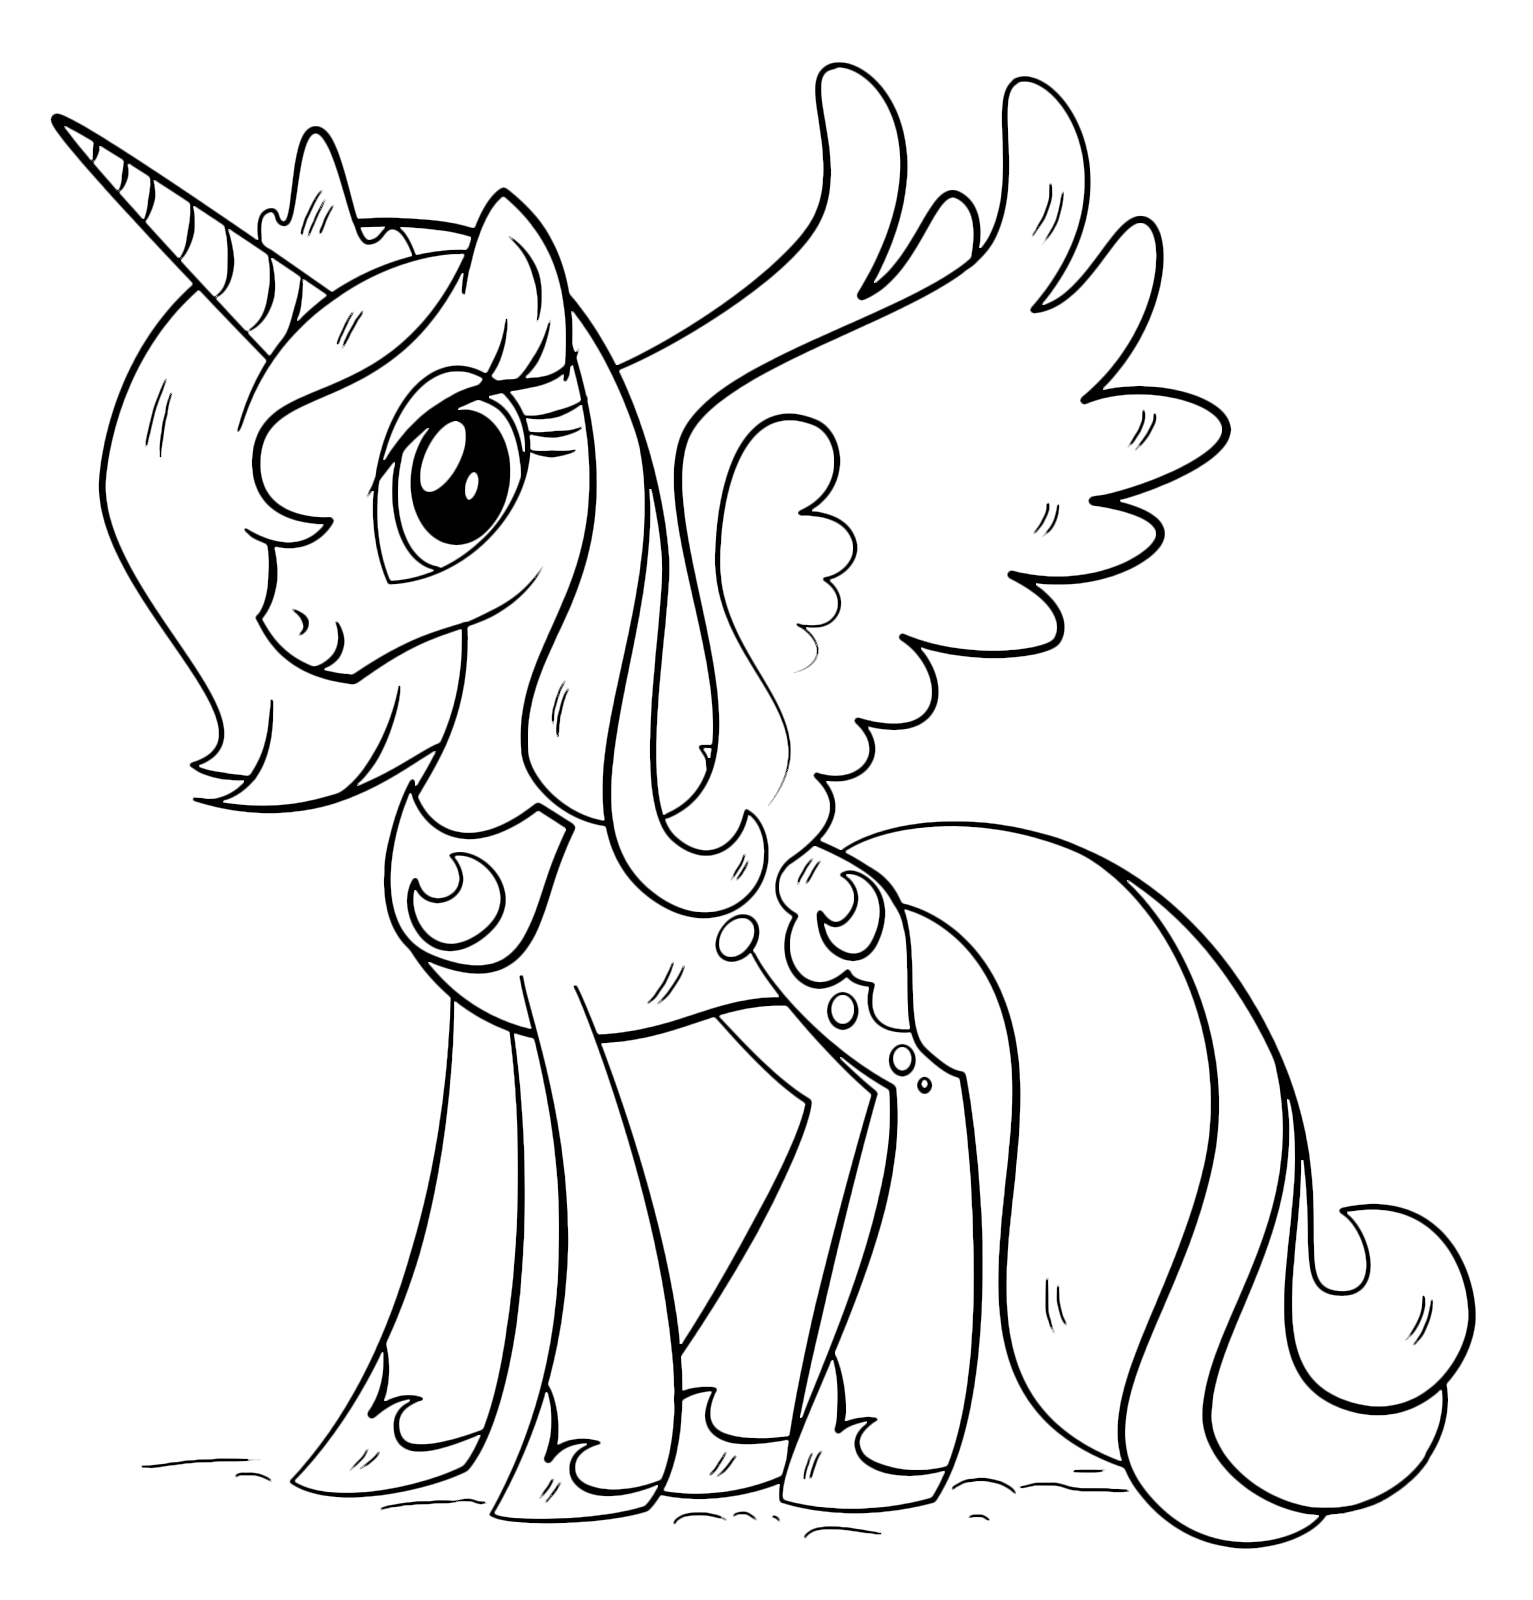 My Little Pony - Princess Luna is the little sister of Celestia